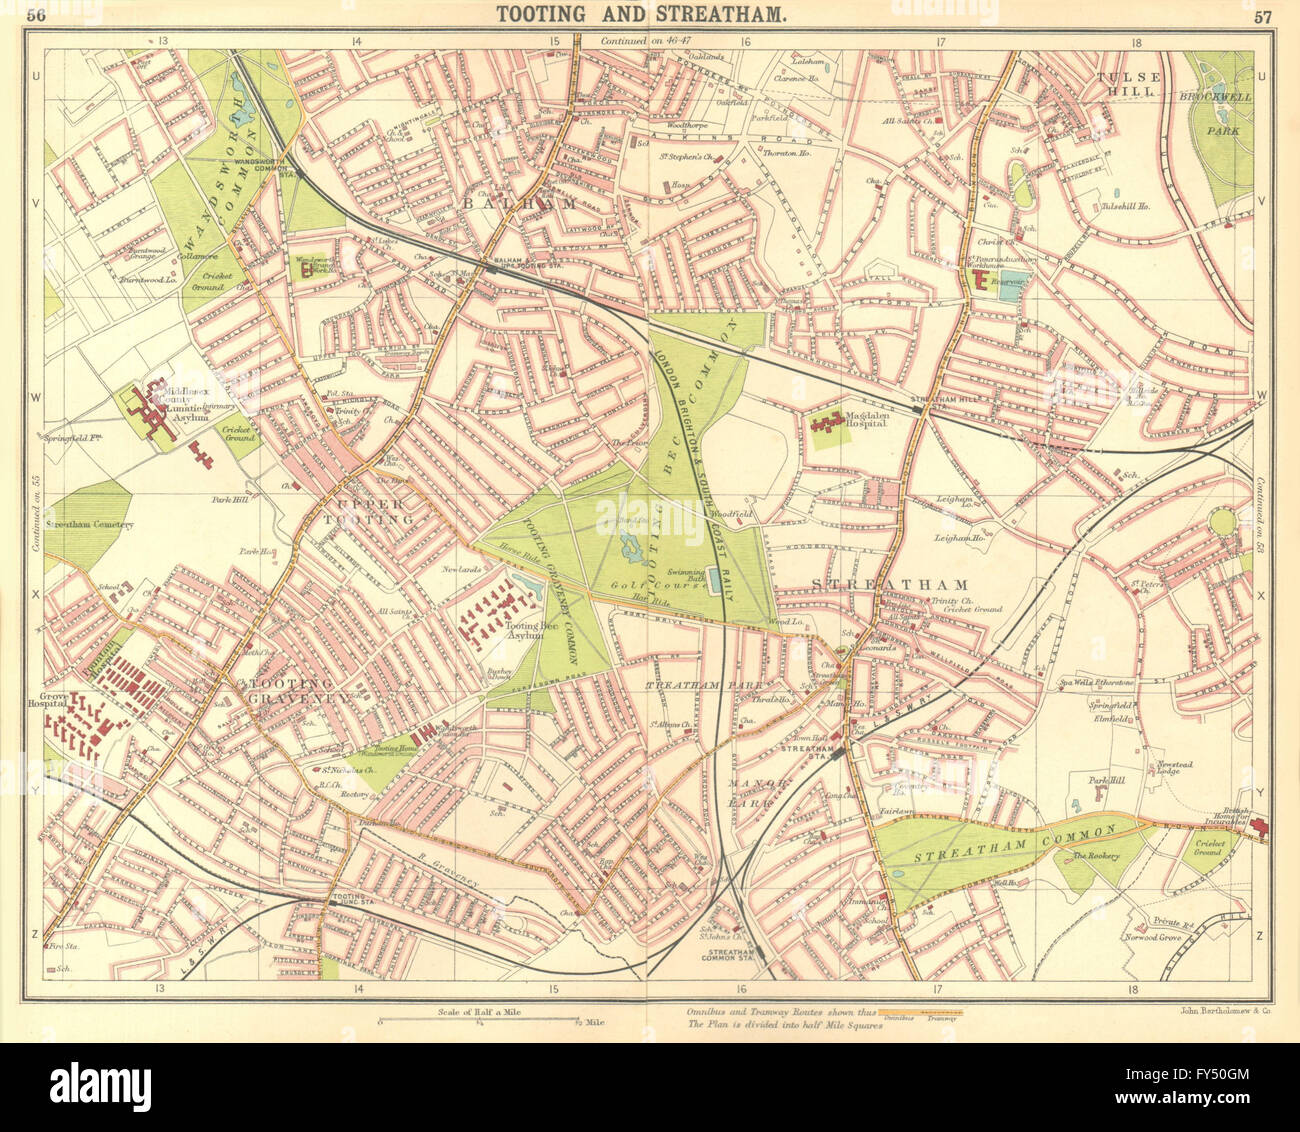 LONDON S: Upper Tooting Graveney Streatham Balham Tulse Hill, 1917 old map Stock Photo